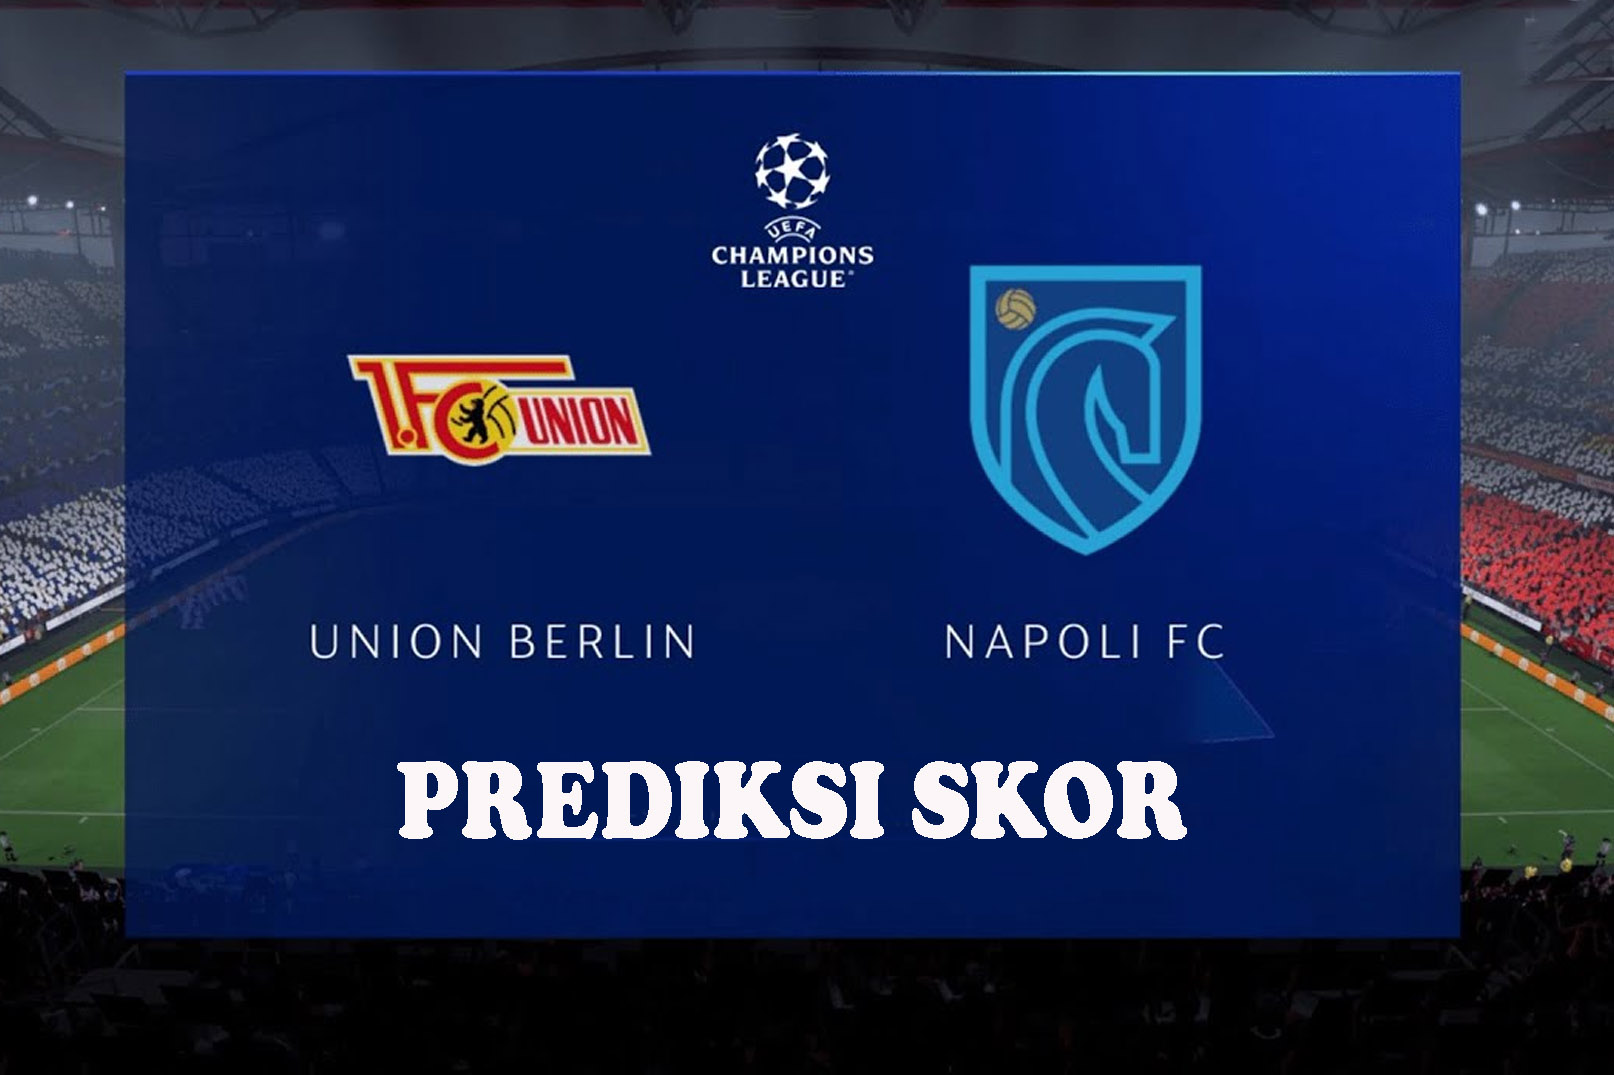 Union Berlin Vs Napoli Liga Champions Matchday 3 Grup C, Head To Head Serta Prediksi Skor